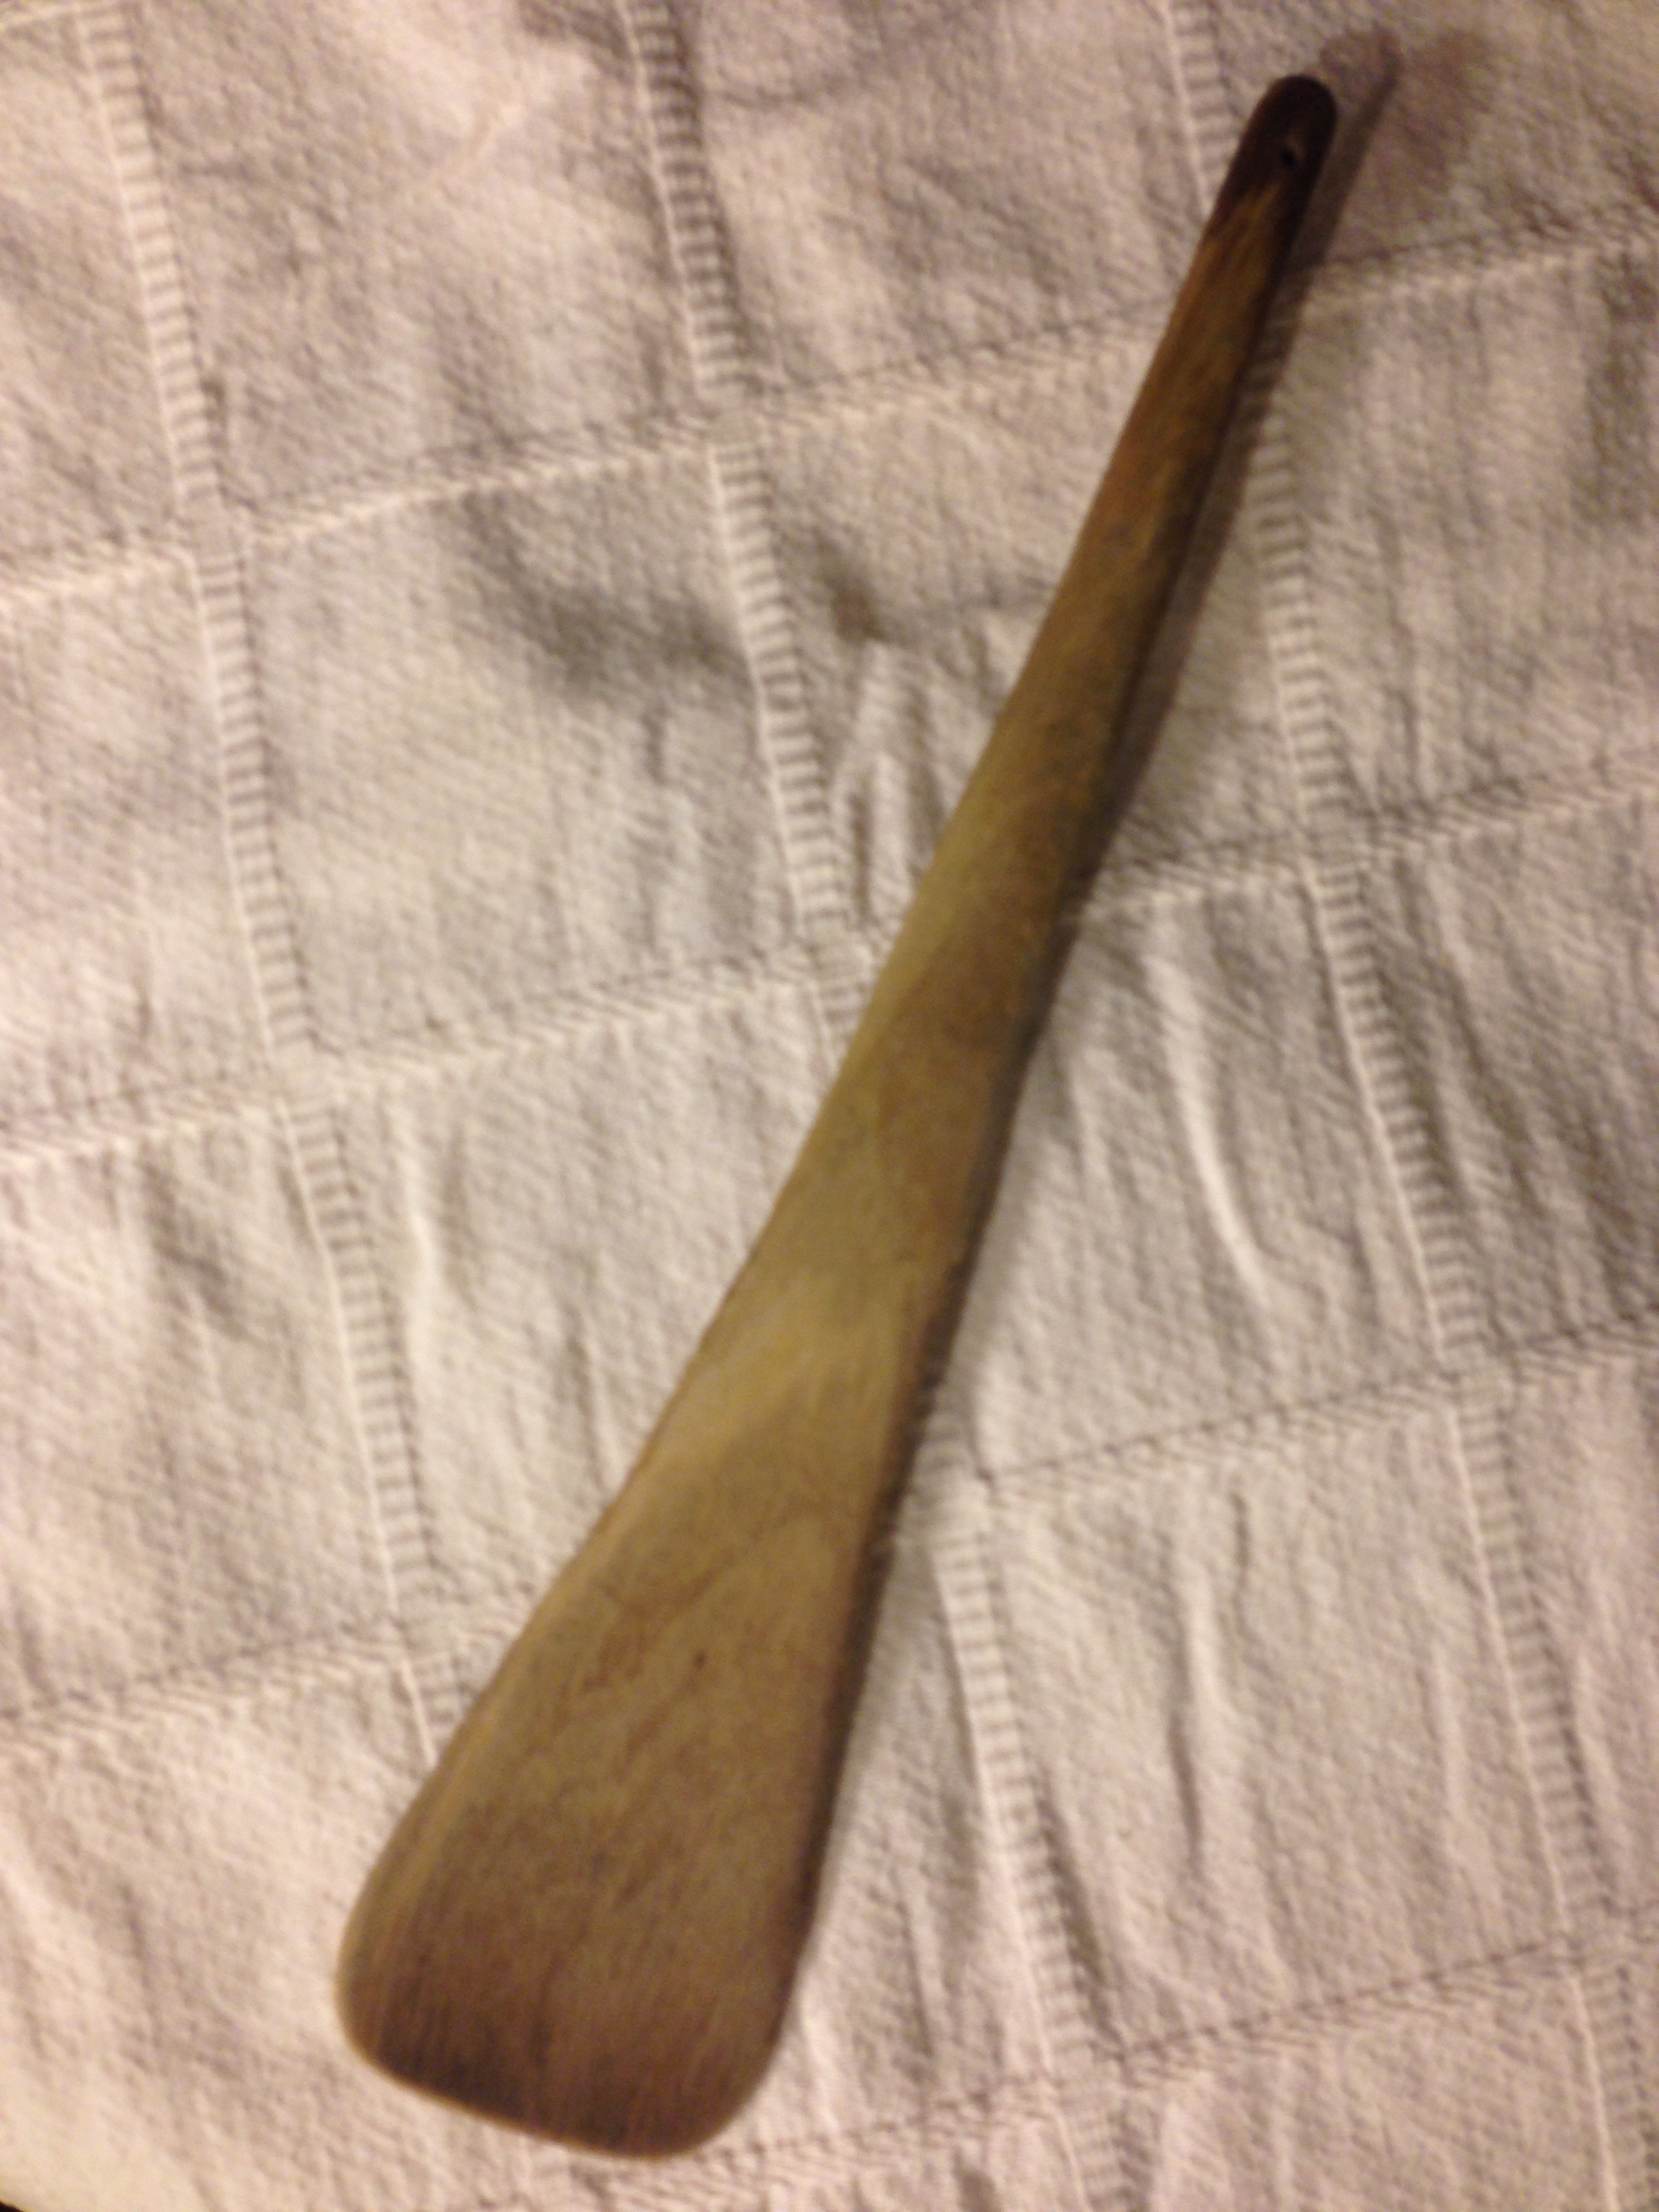 wooden tool